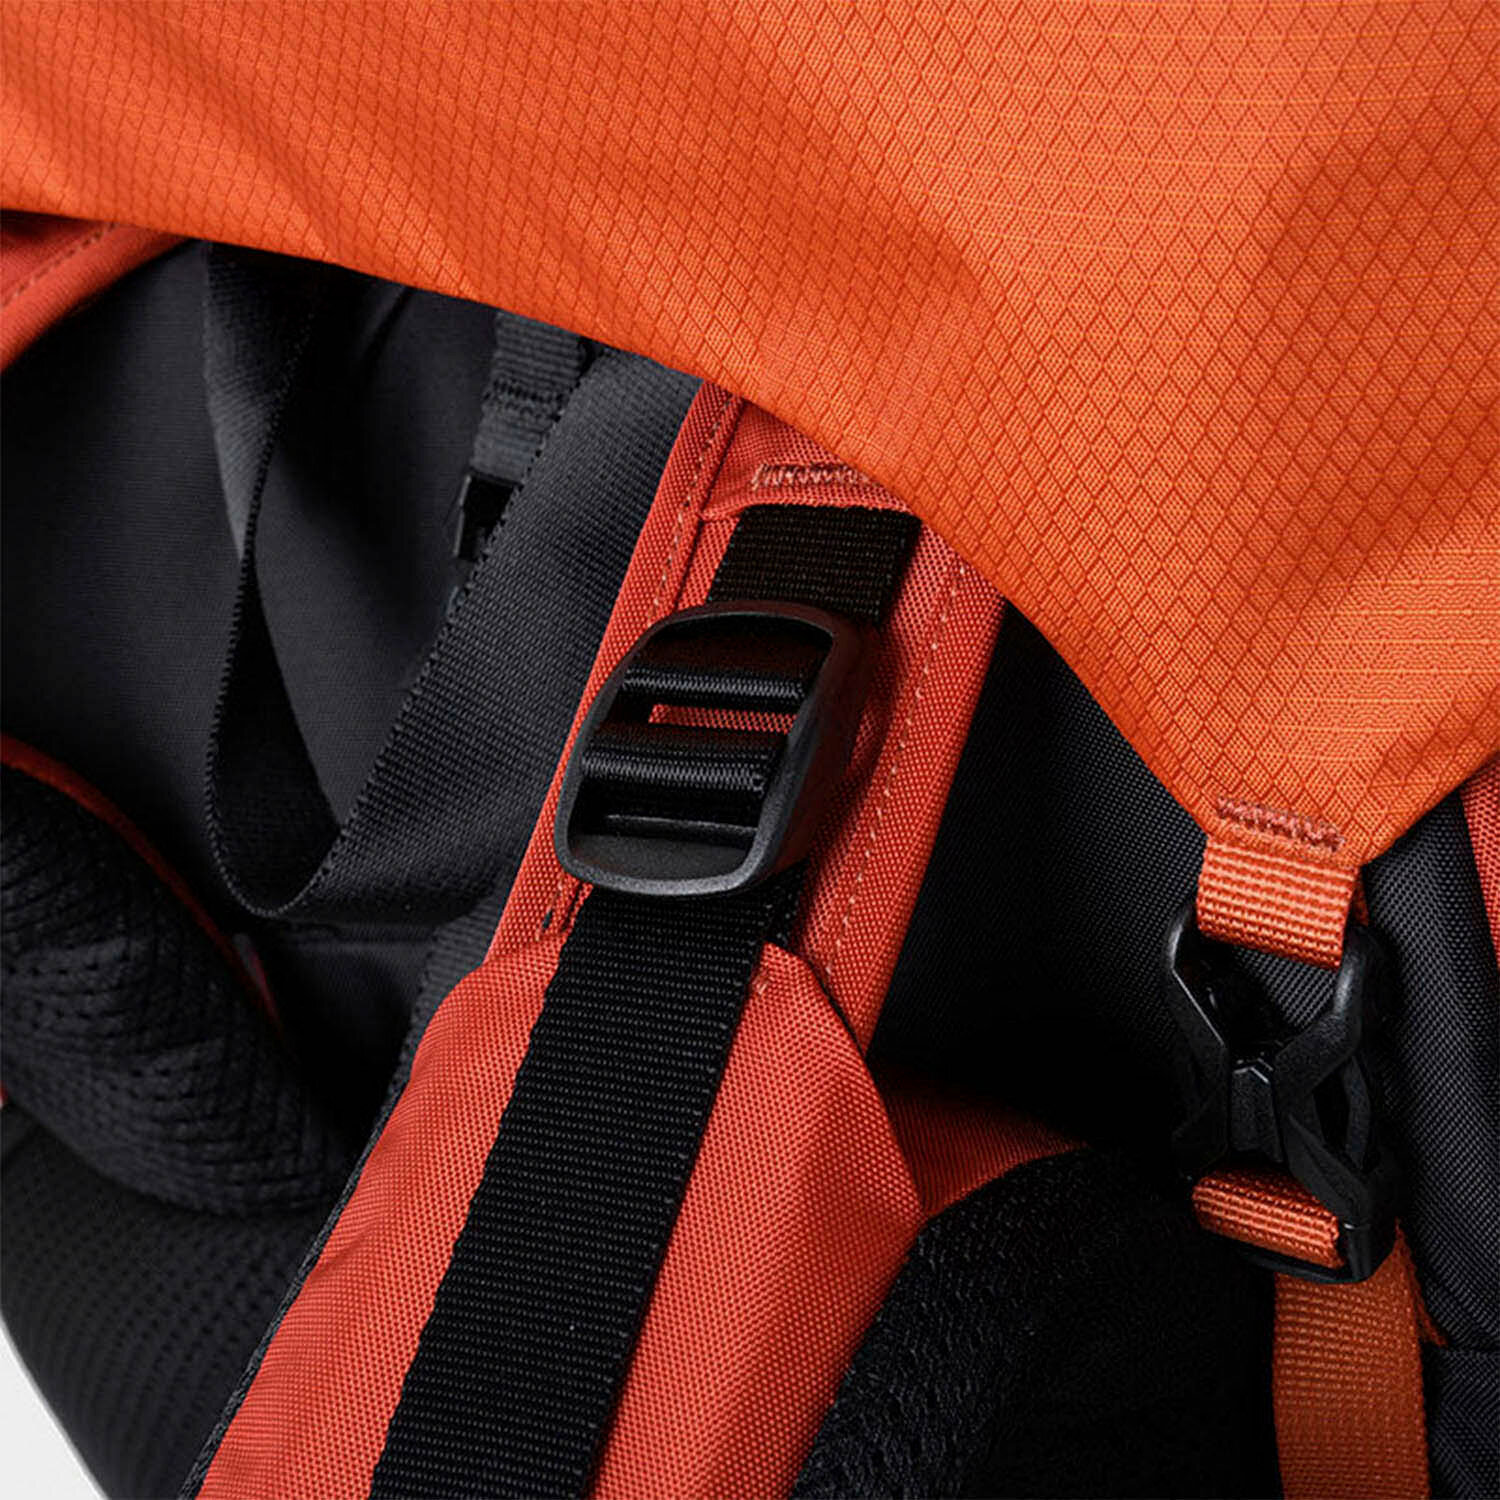 Рюкзак Kailas Ridge III Lightweight Trekking Backpack 65+5L S Oxidized Orange